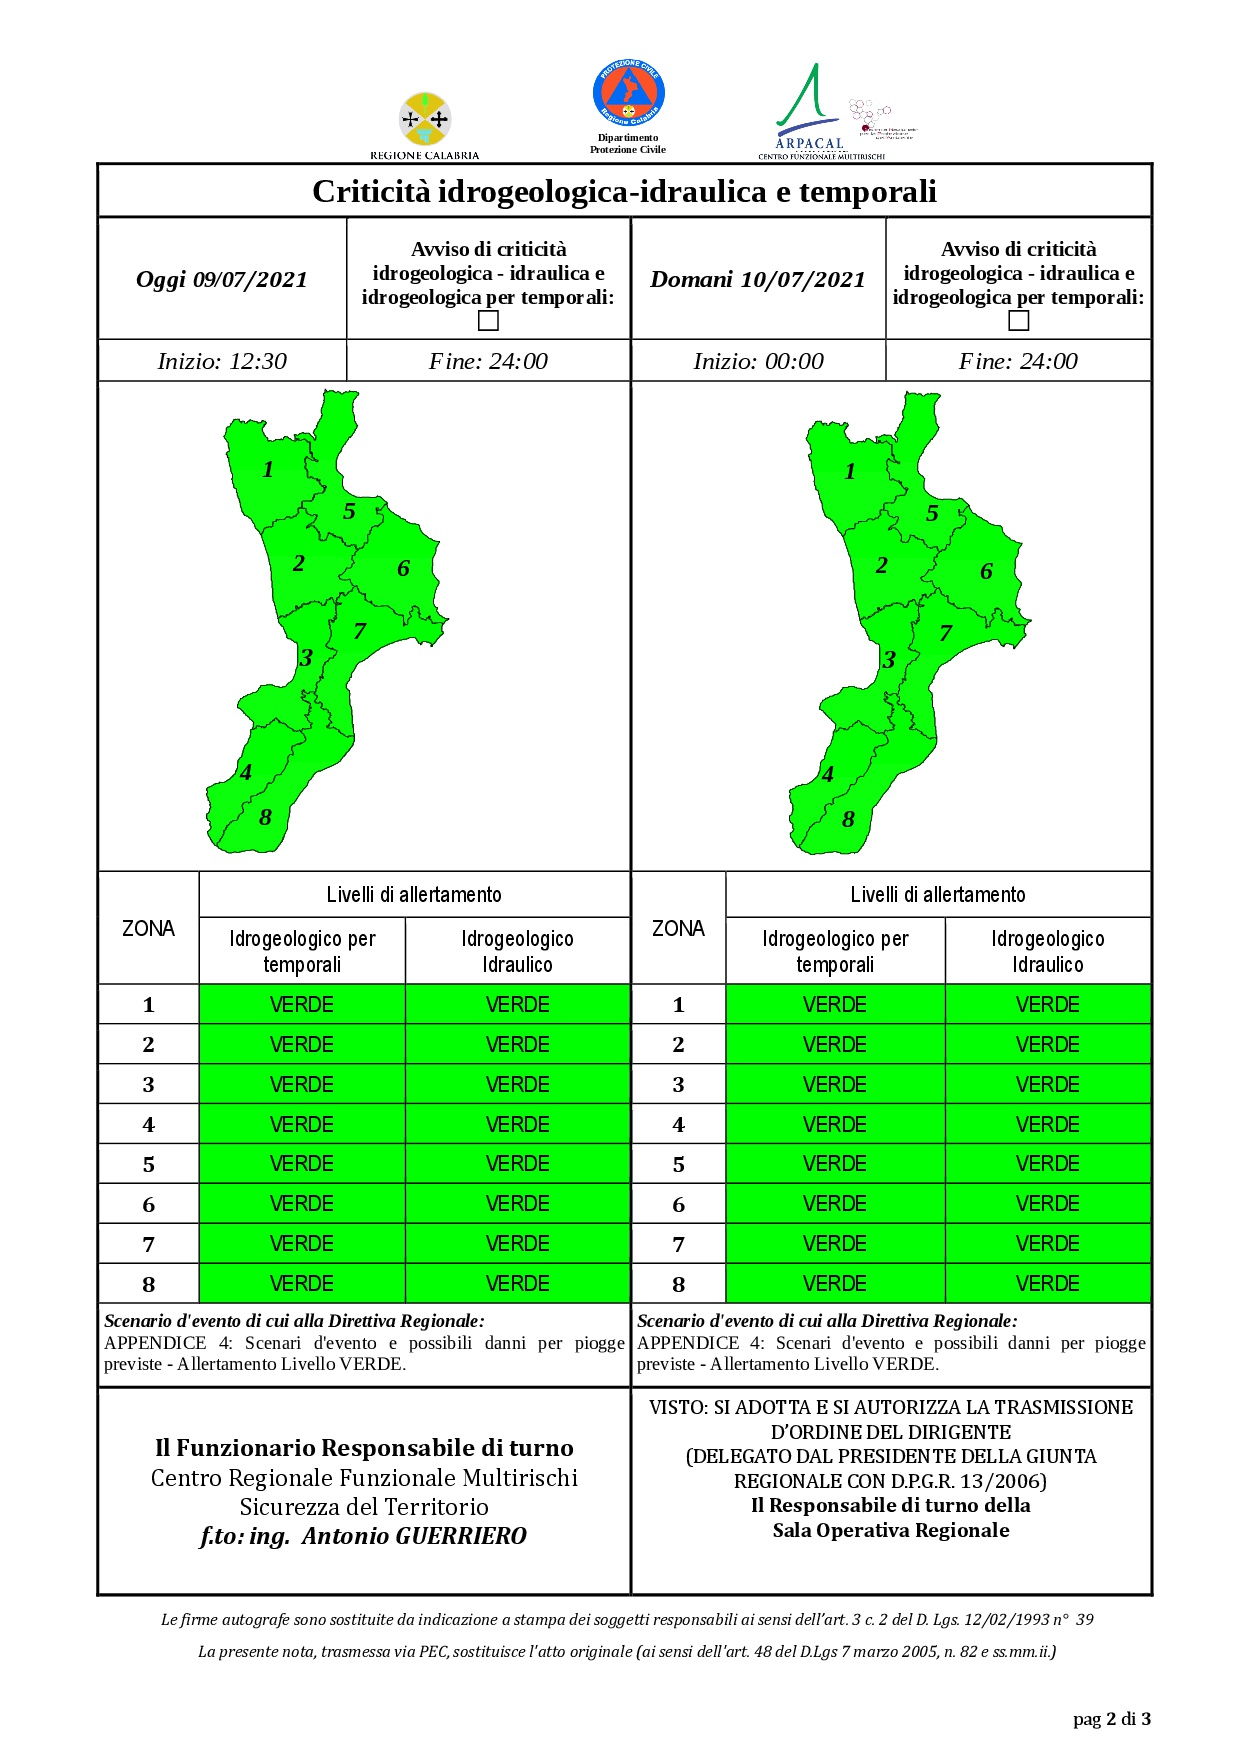 Criticità idrogeologica-idraulica e temporali in Calabria 09-07-2021